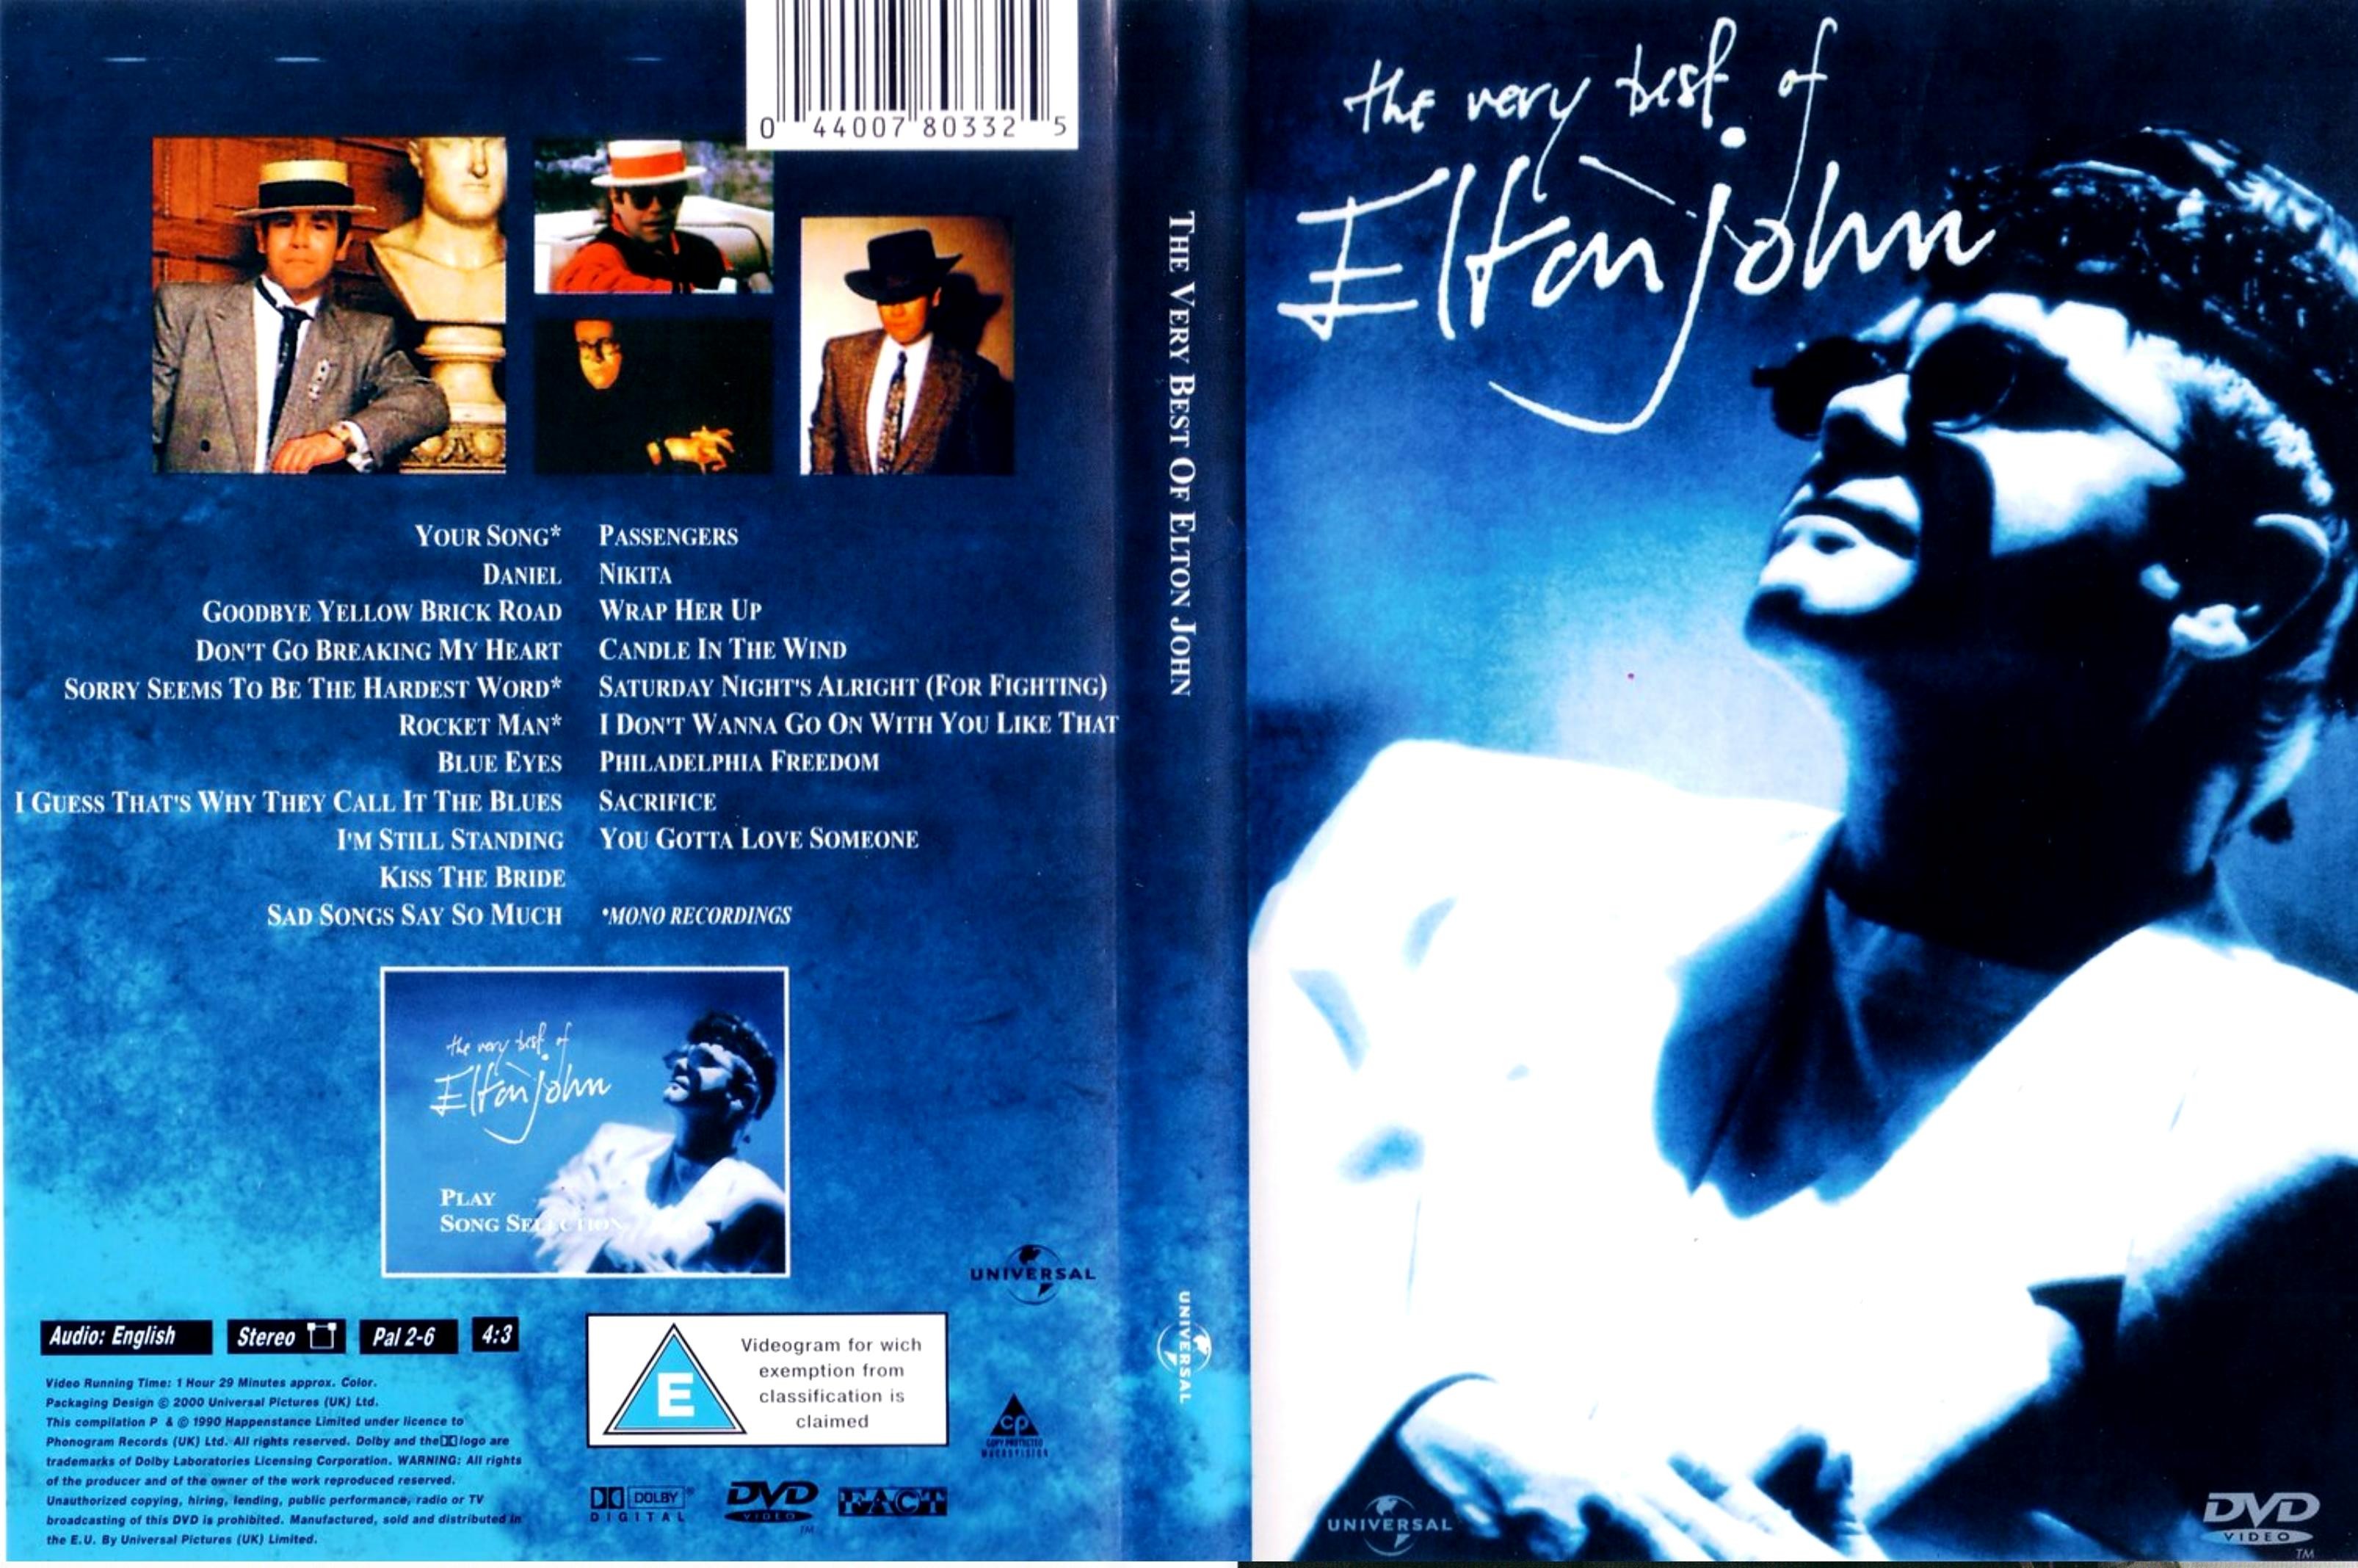 Jaquette DVD Elton John The very best of